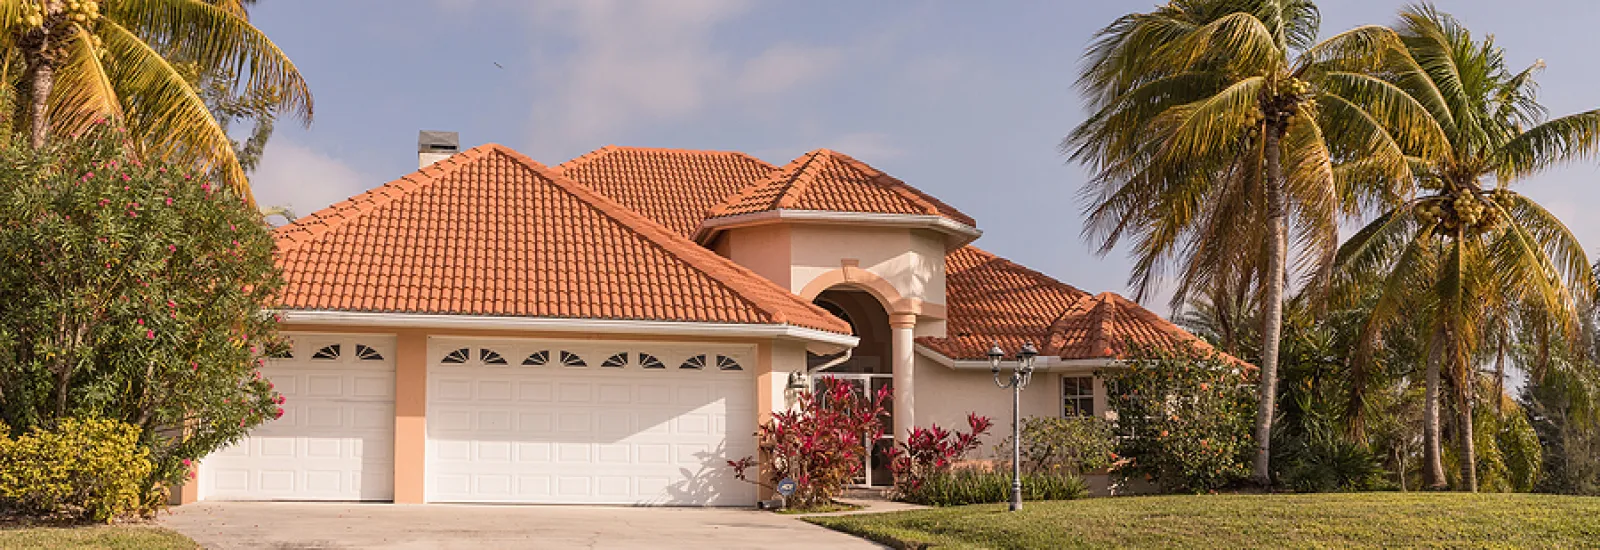 Residential Roof Repair Tips in Florida